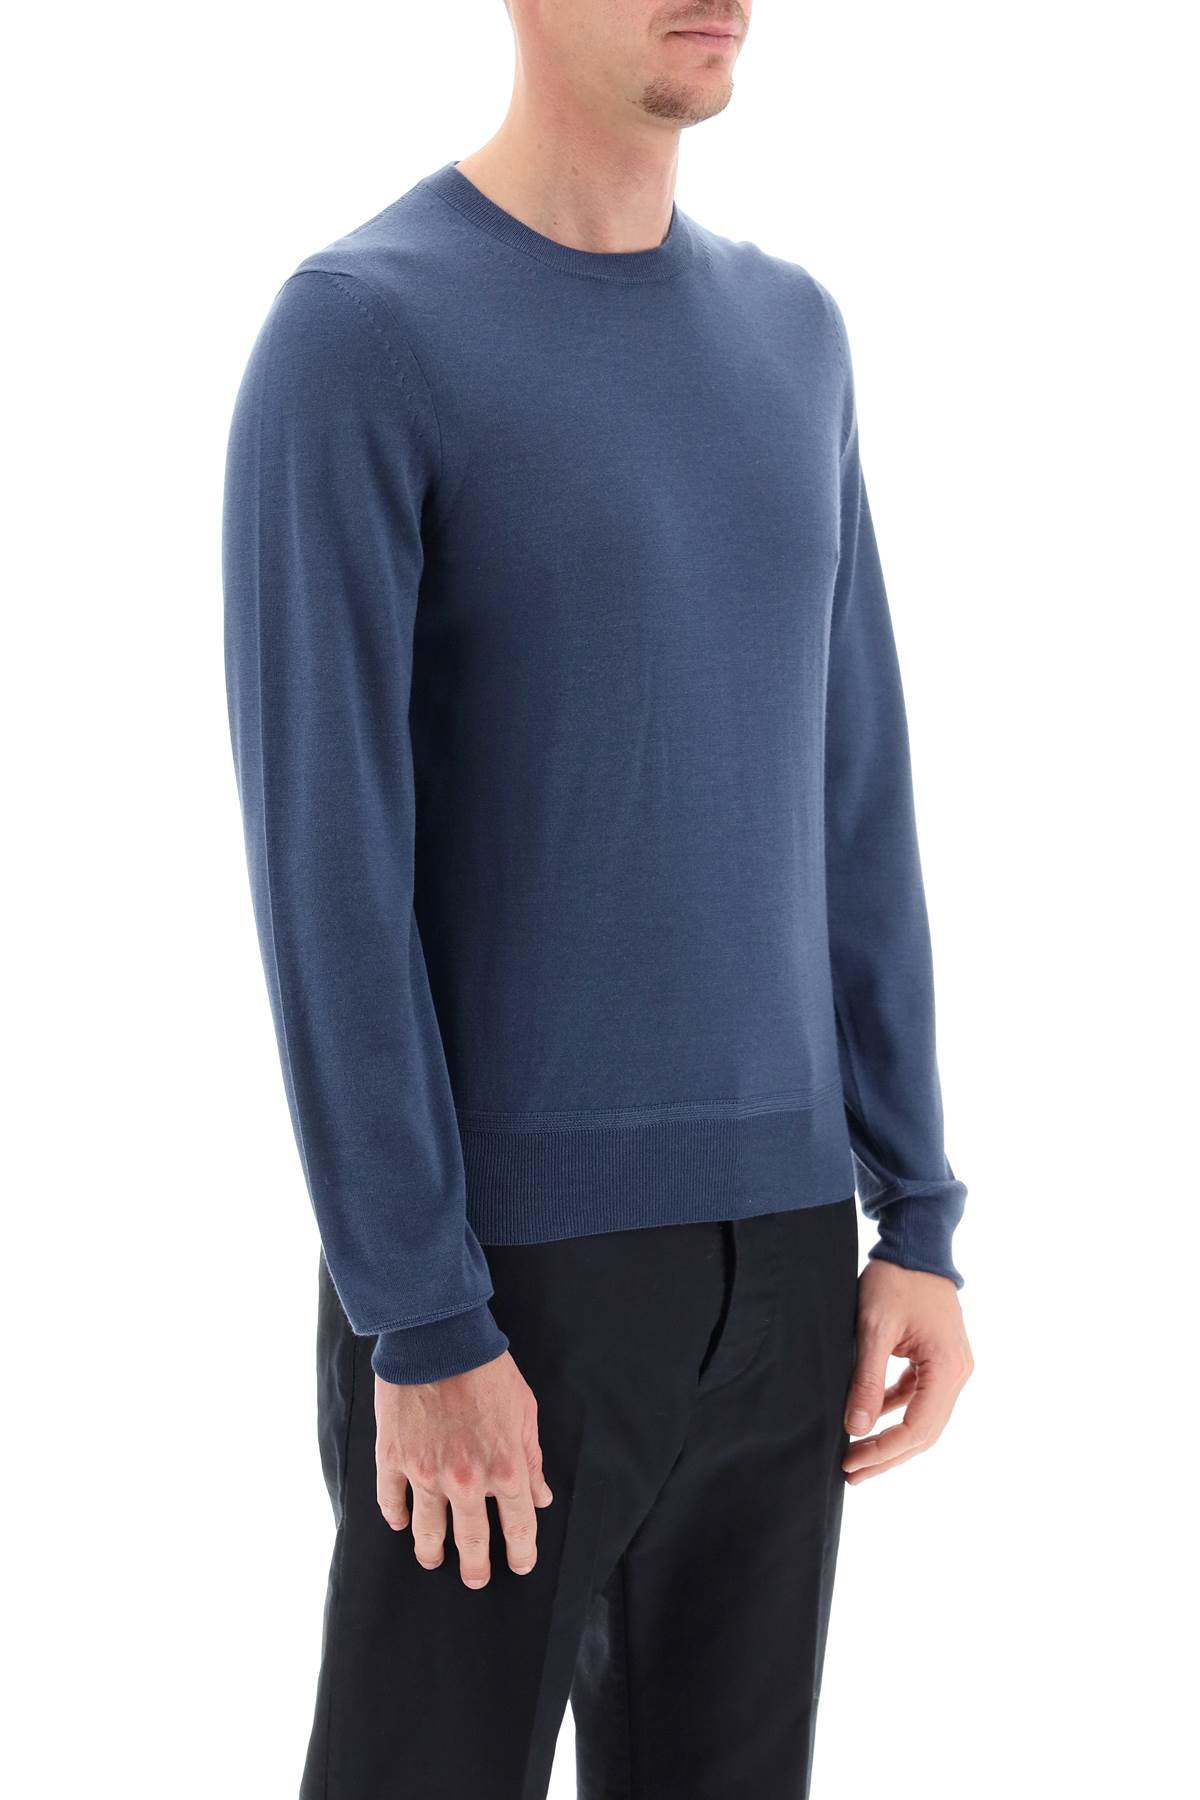 Tom ford light silk-cashmere sweater-1